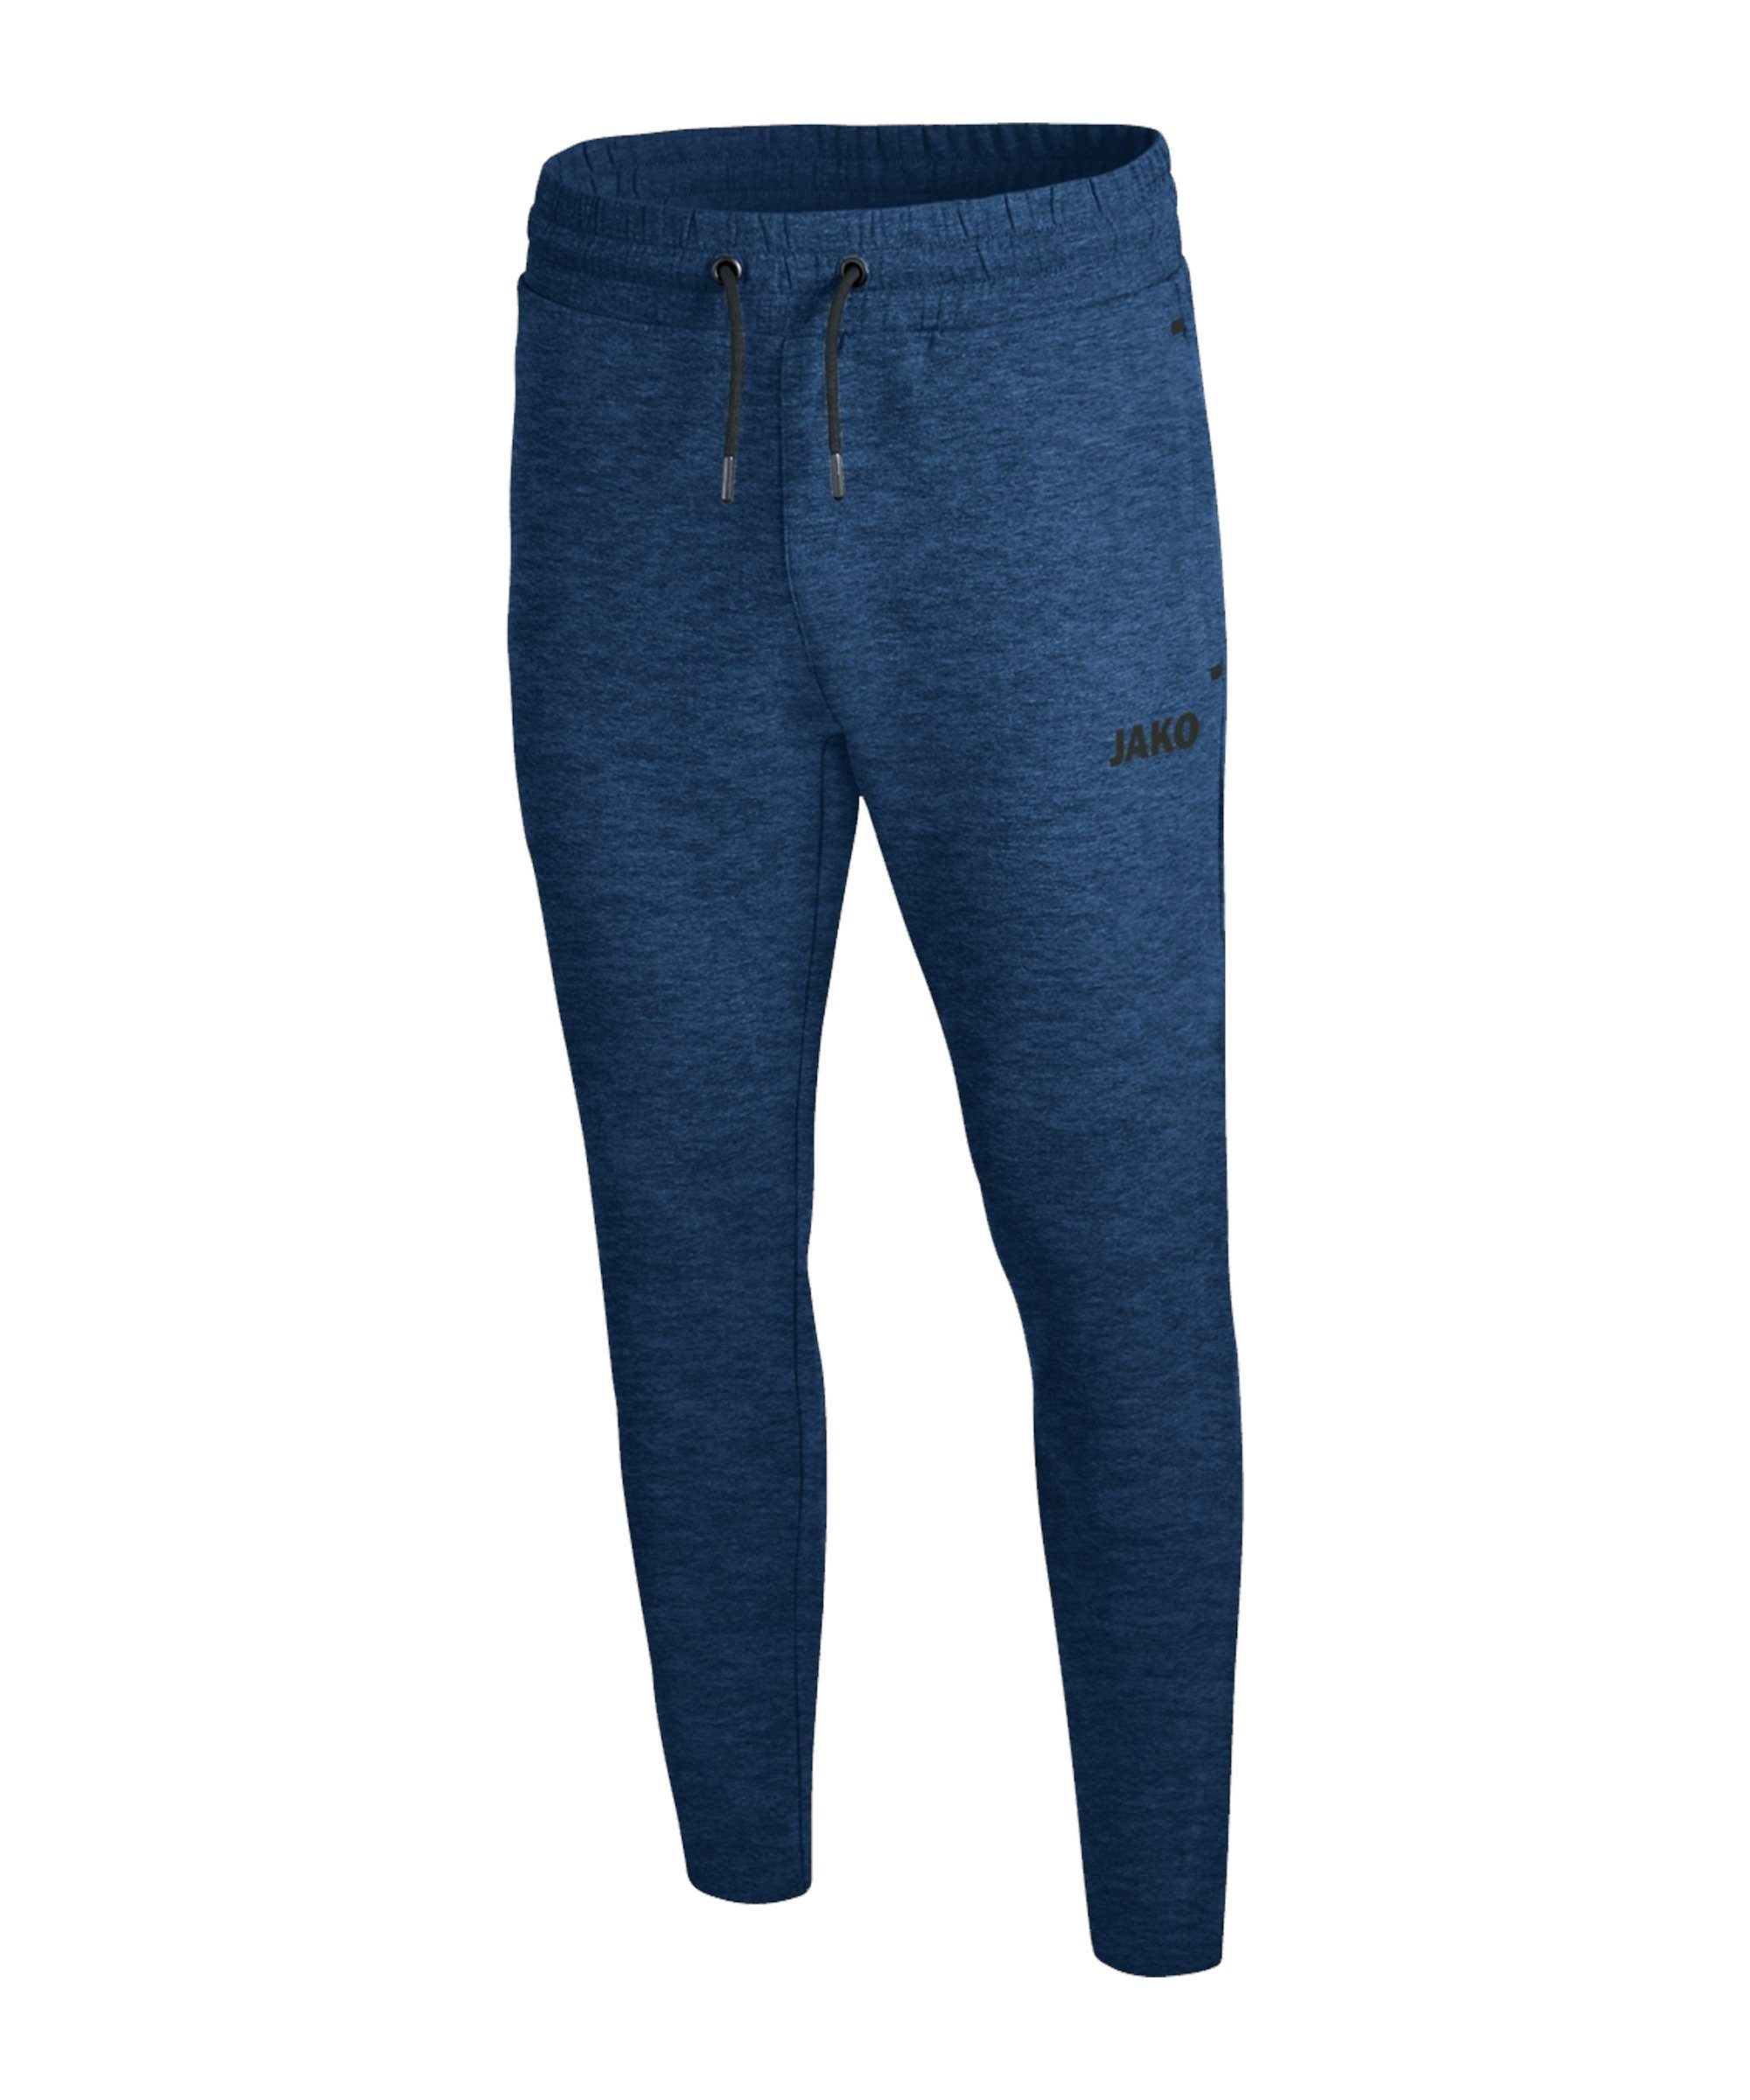 Jogginghose Jako Premium Basic blau Sporthose